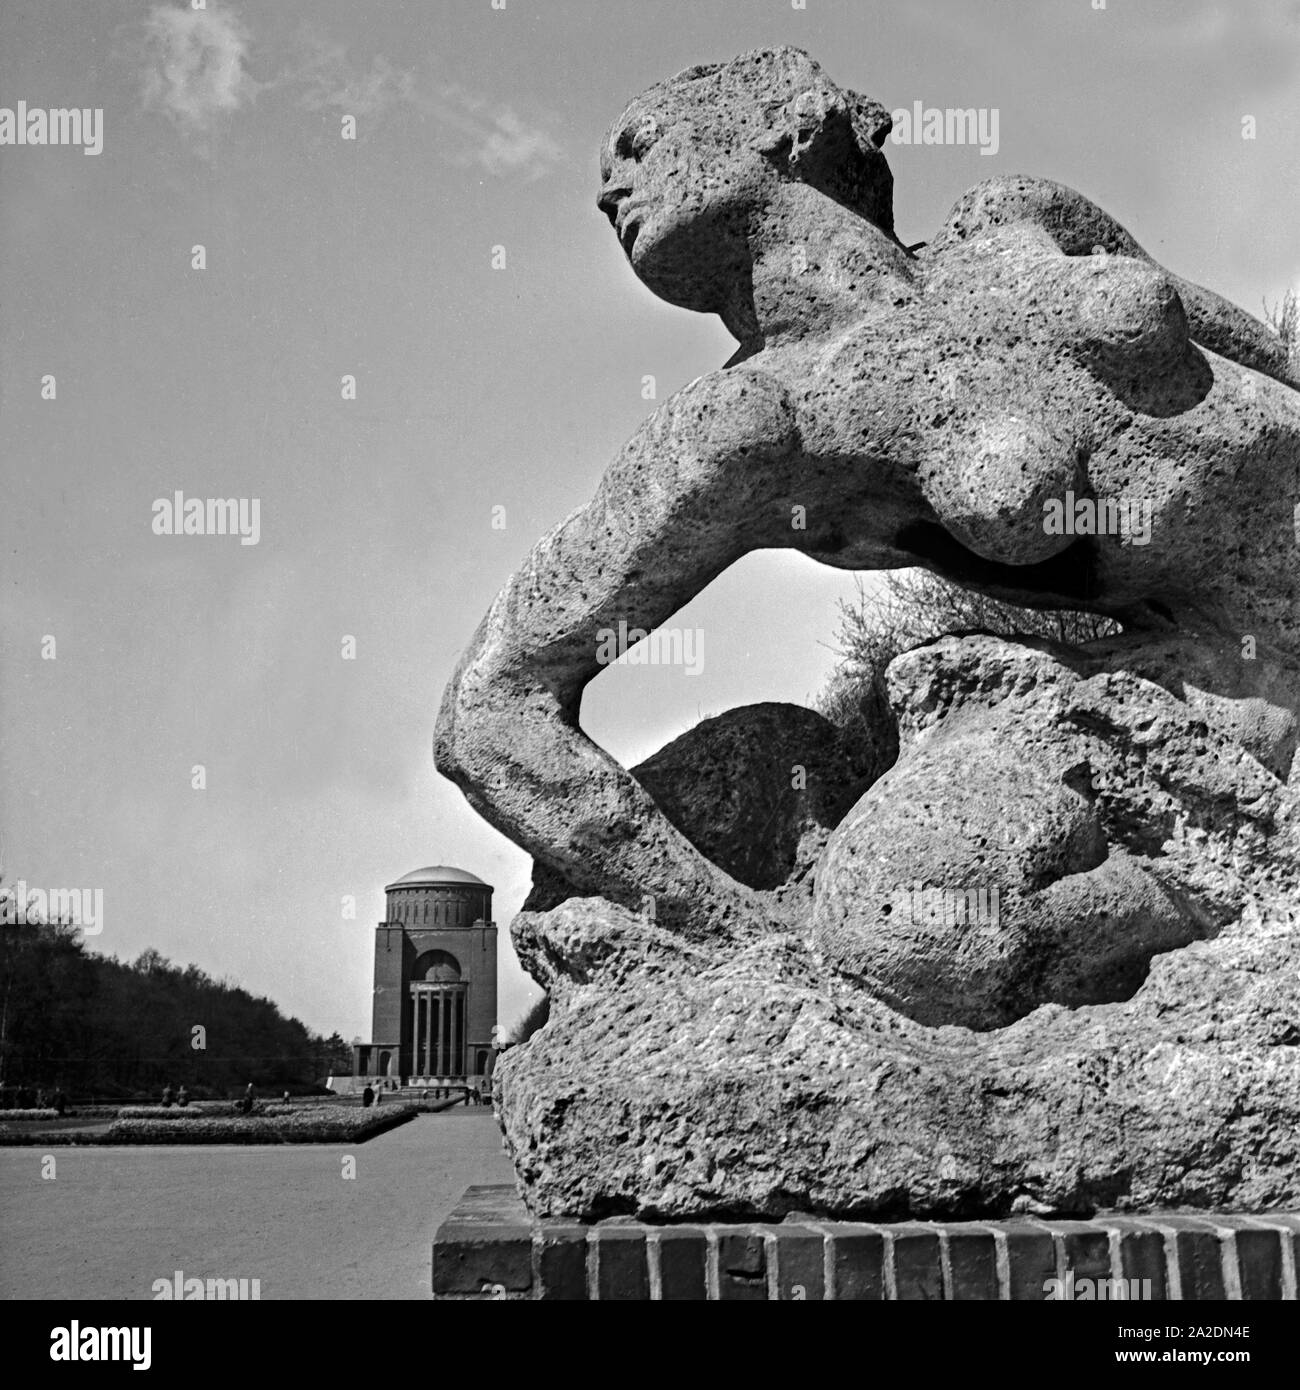 Im Stadtpark mit dem Planetarium und der Skulptur 'Badende' von Georg Kolbe à Hamburg, Deutschland 1930er Jahre. La sculpture et l'observatoire situé au parc de la ville de Hambourg, Allemagne 1930. Banque D'Images